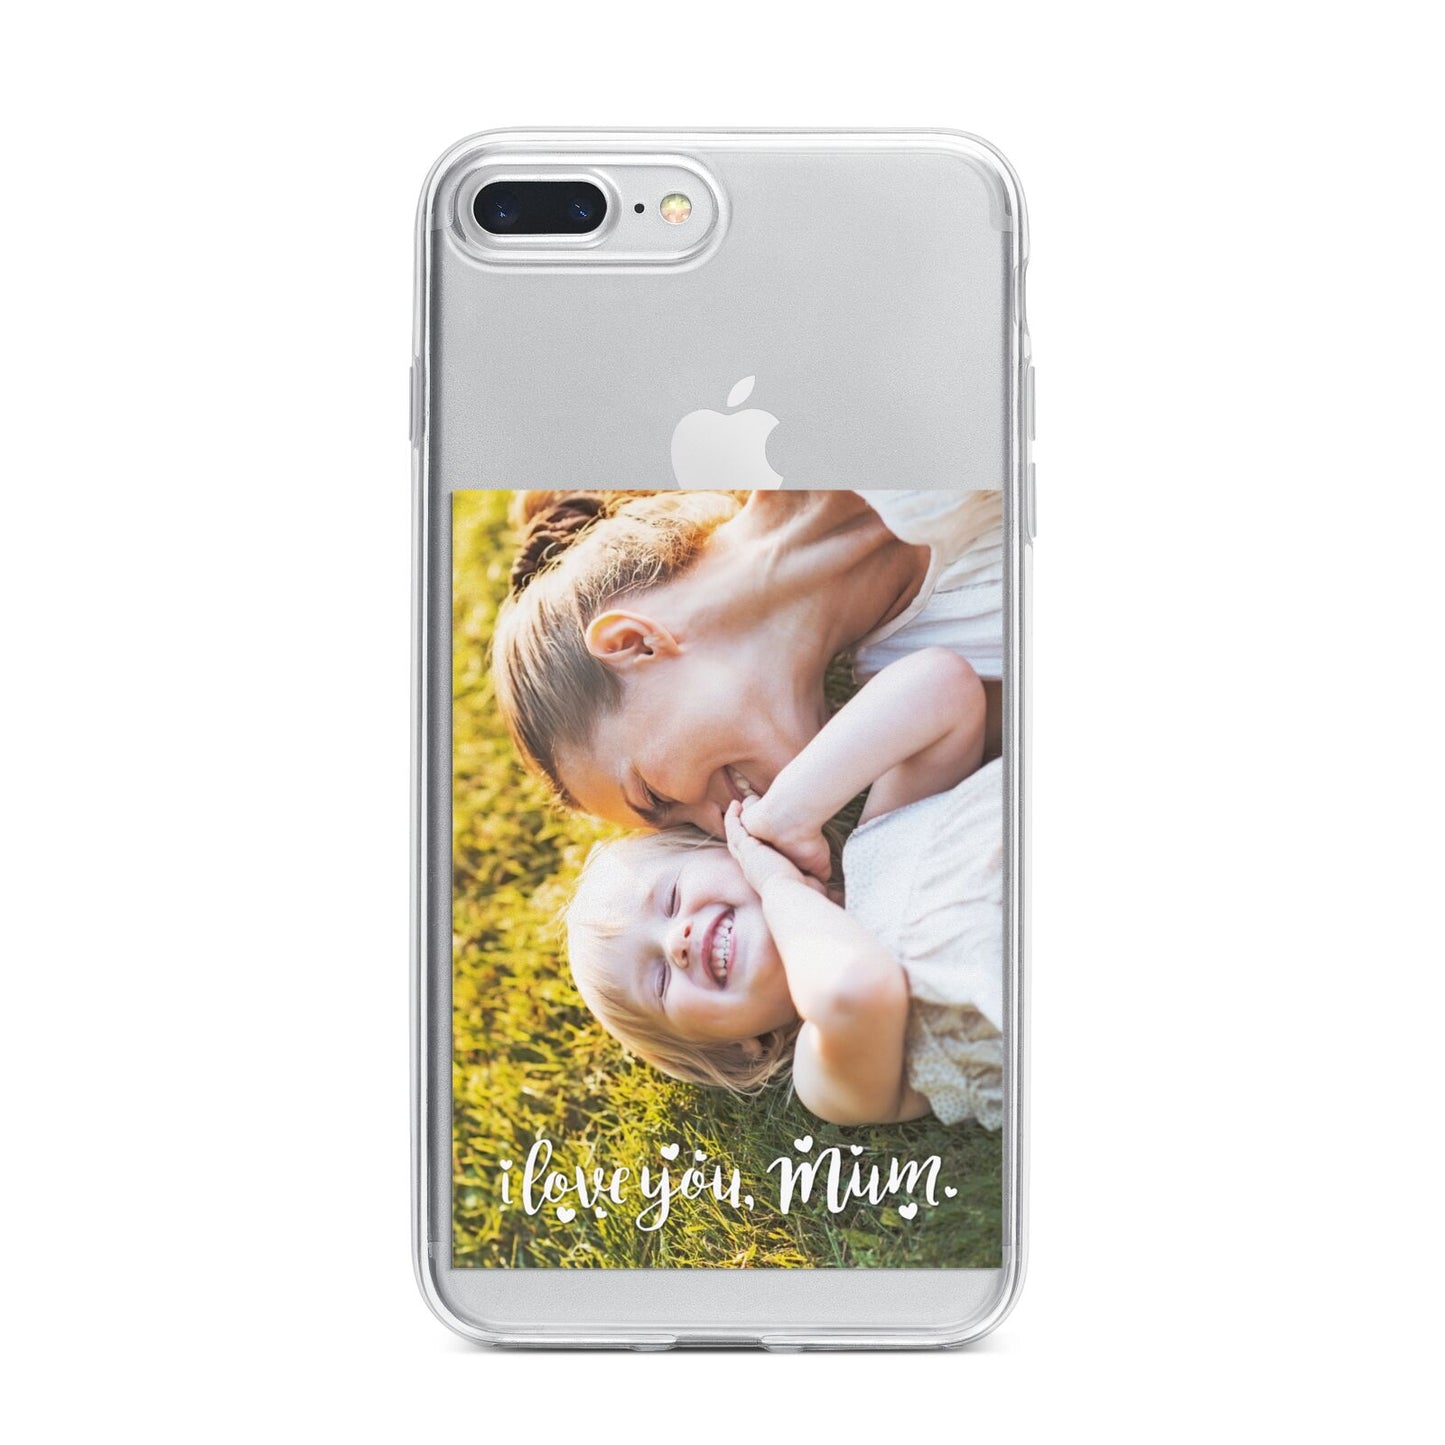 Love You Mum Photo Upload iPhone 7 Plus Bumper Case on Silver iPhone